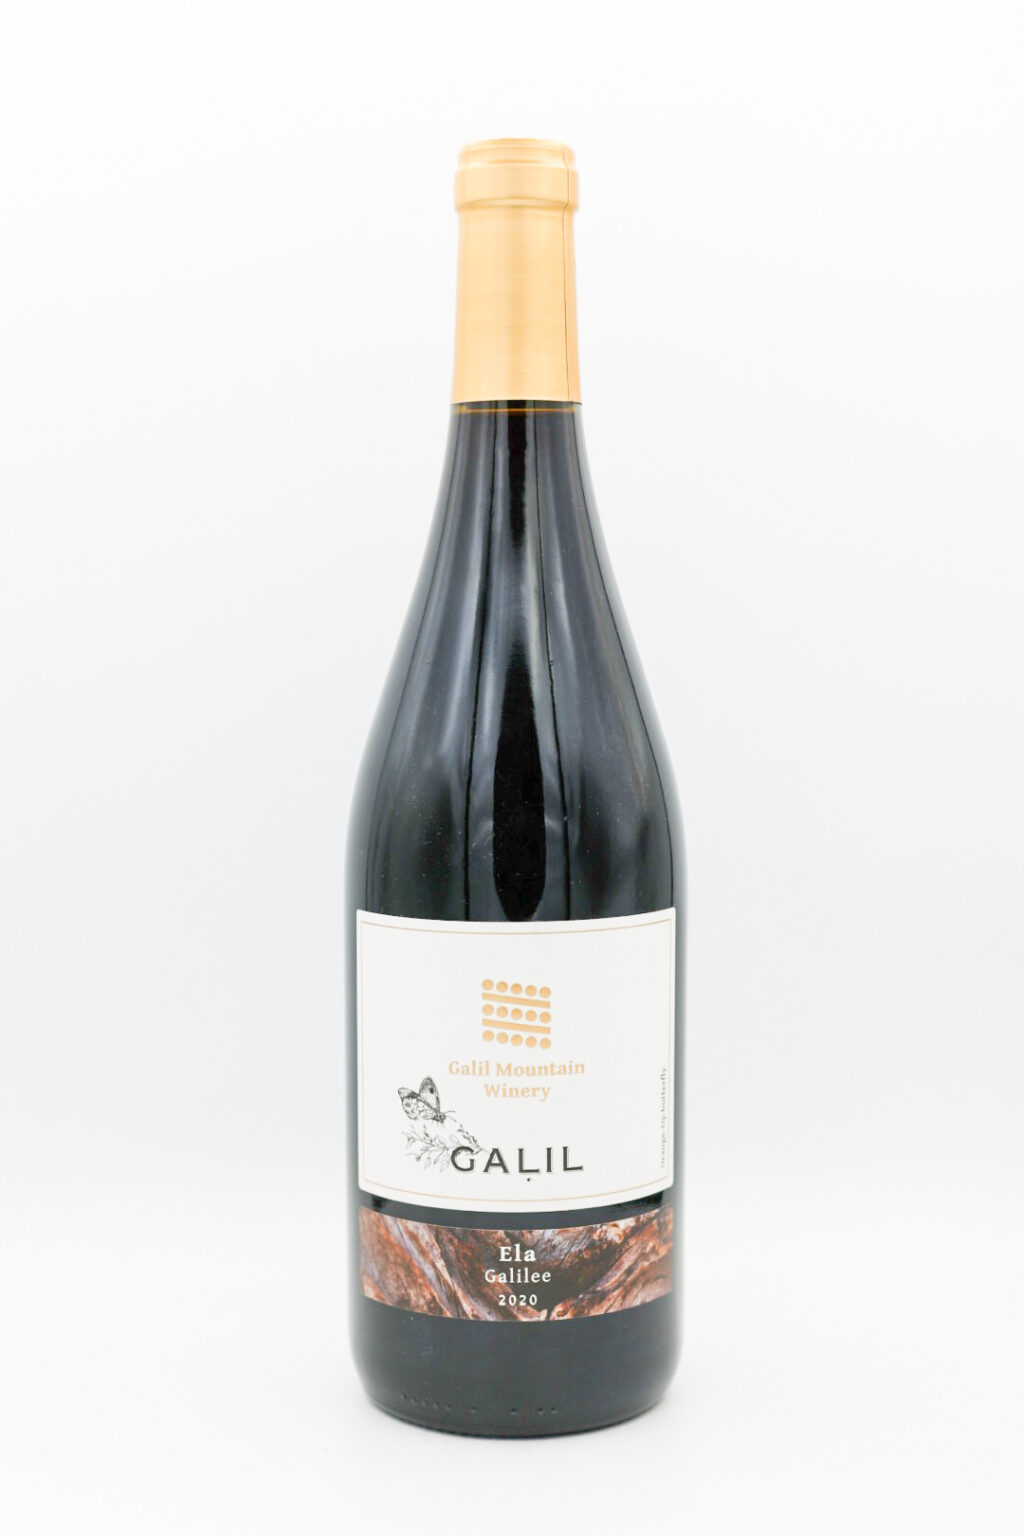 Galil Mountain Winery  Upper Galilee Ela  2020